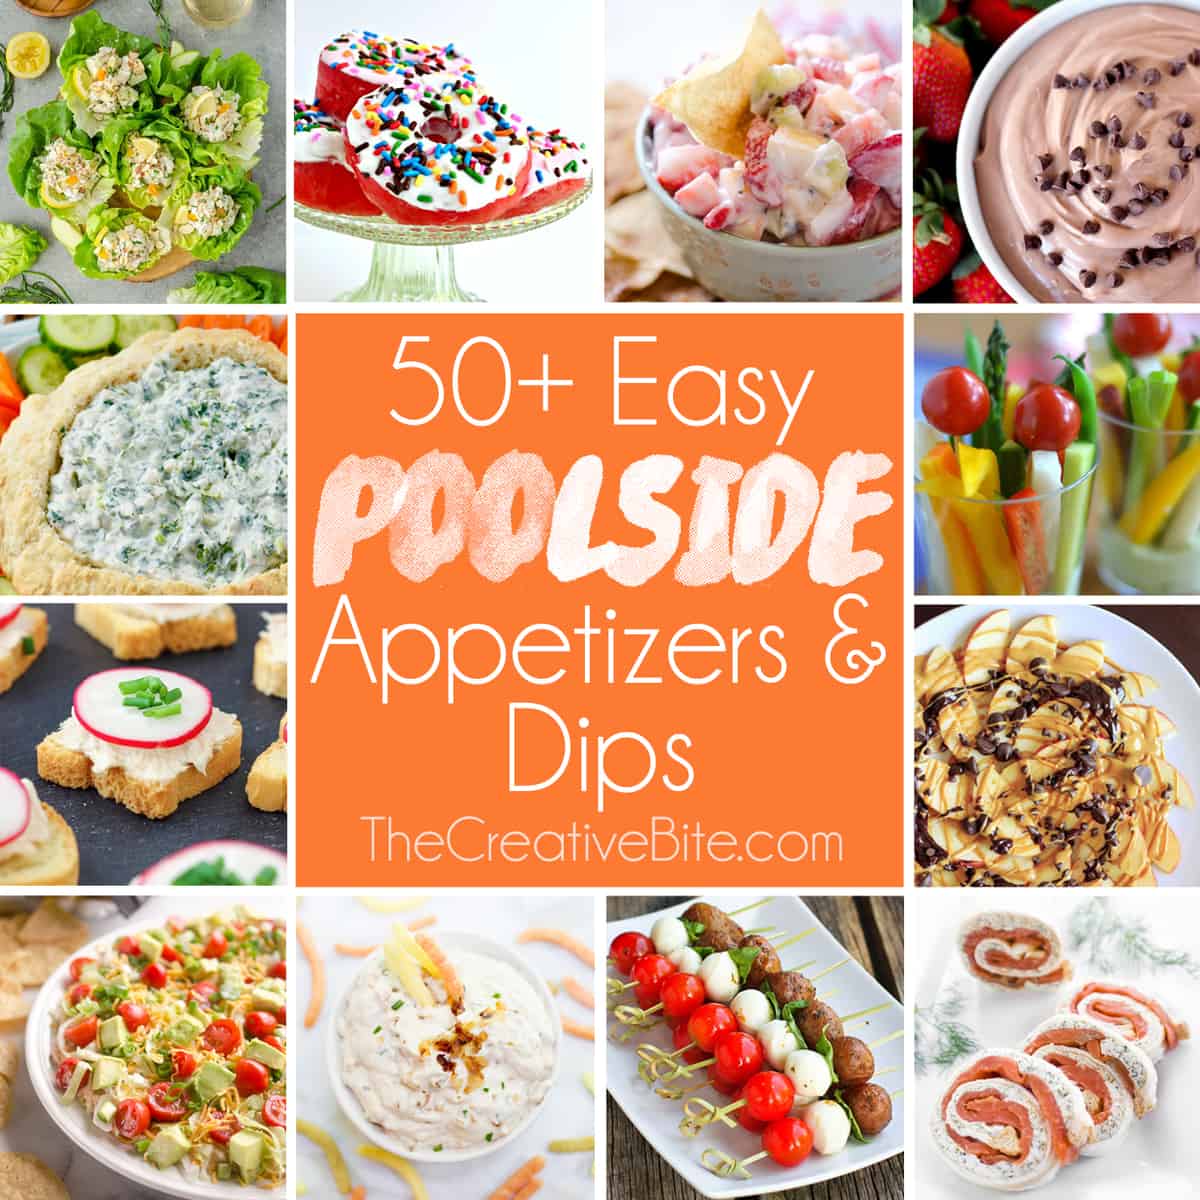 Easy Poolside Appetizers & Dips